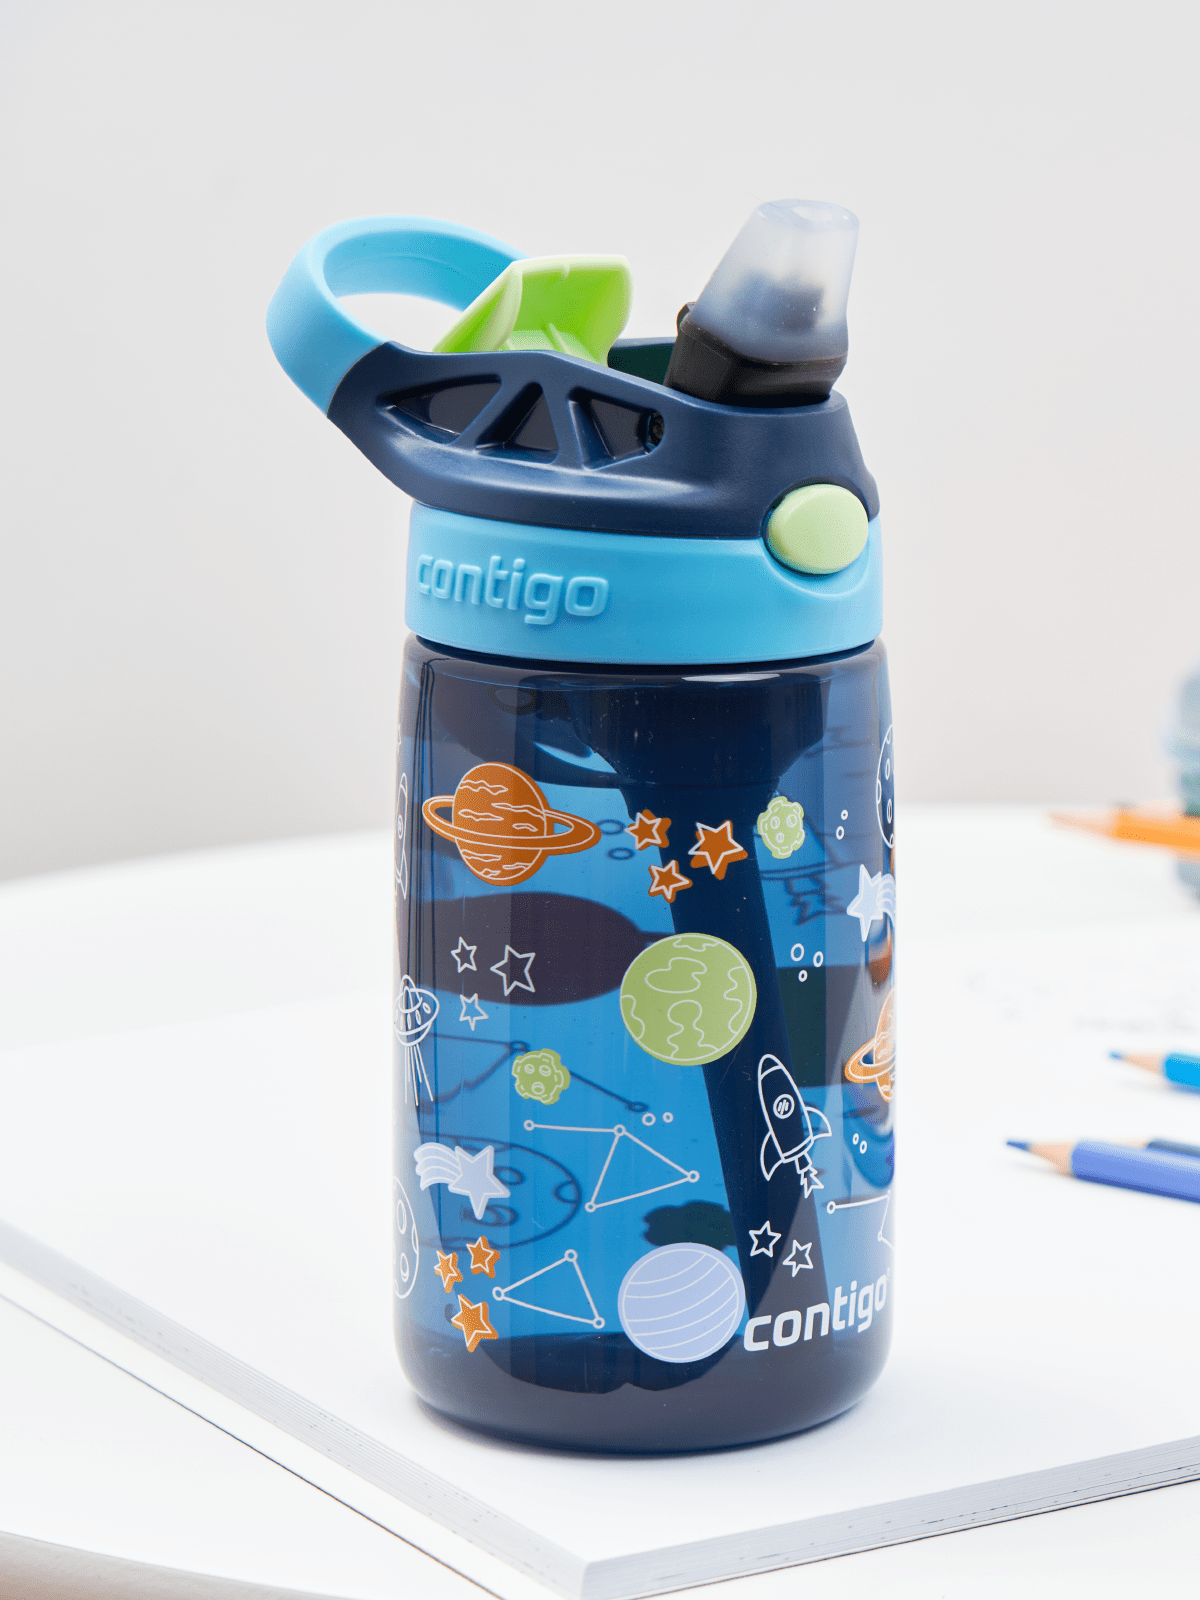 https://kubekcontigo.pl/eng_pl_Water-bottle-bottle-for-children-Contigo-Easy-Clean-420ml-Blueberry-Cosmos-66904_5_5.png